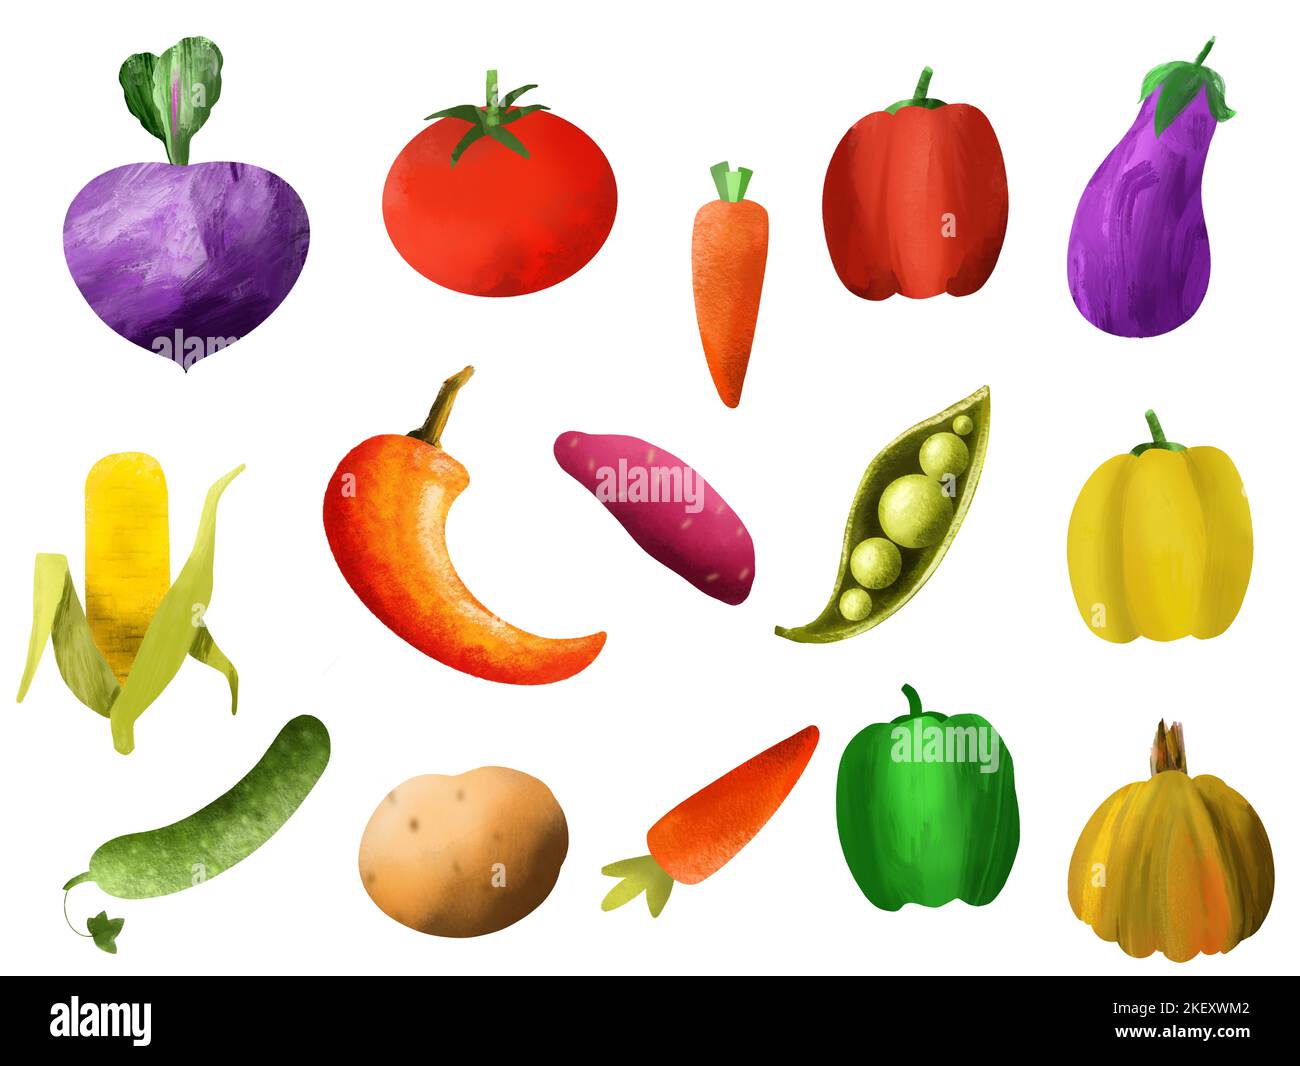 Illustration set of vegetables isolated on white background Stock Photo